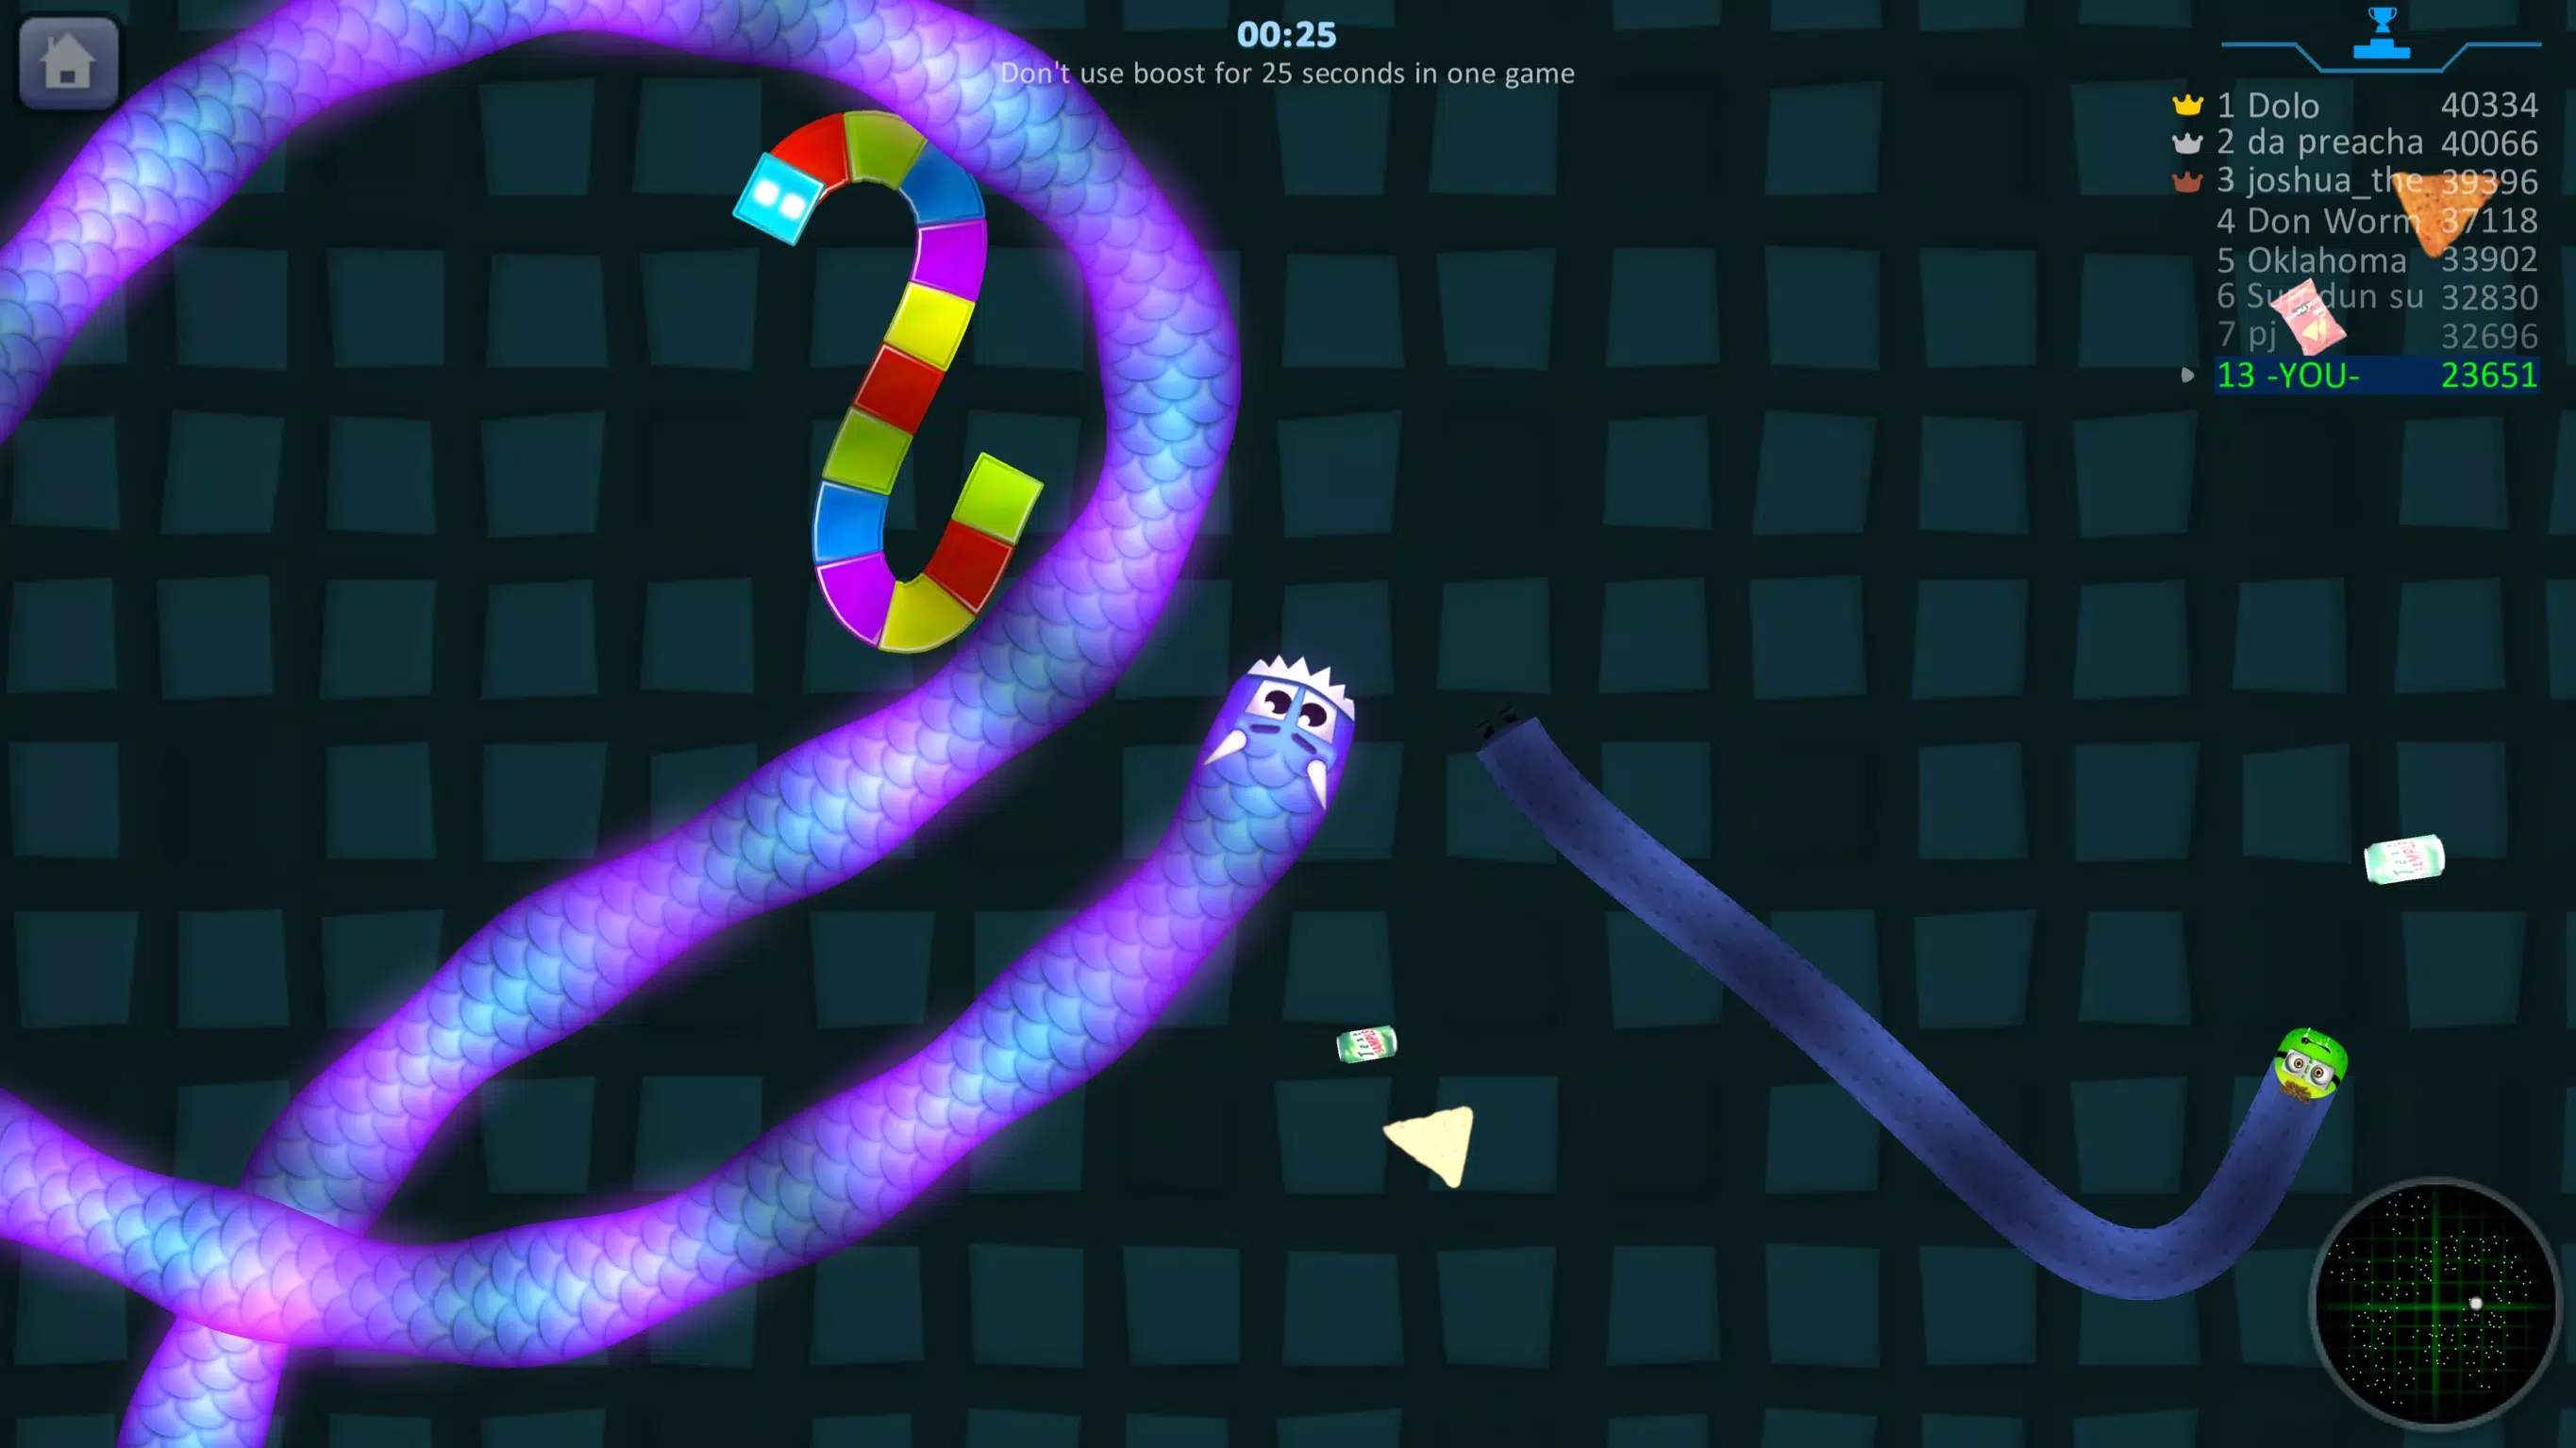 Stream Snake.io - A Fun and Addictive Snake .io Game You Can Play